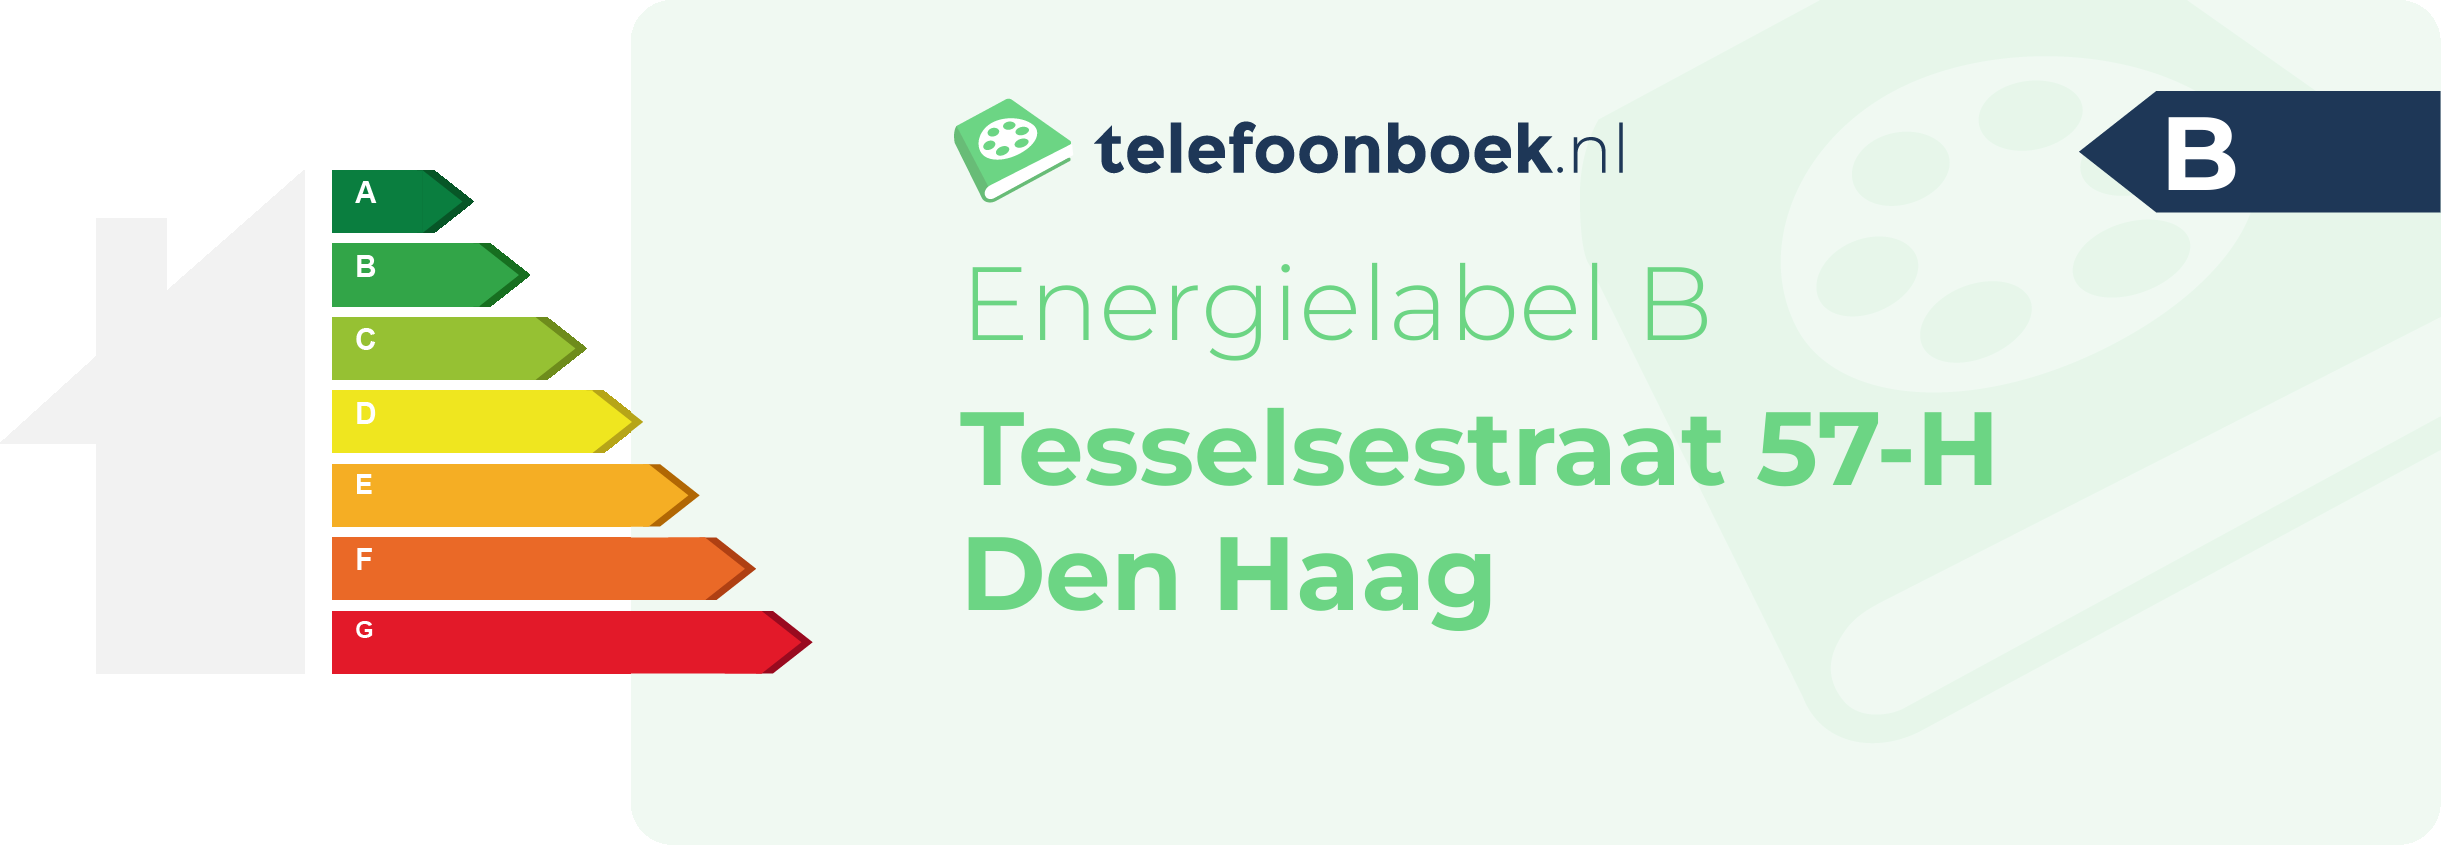 Energielabel Tesselsestraat 57-H Den Haag